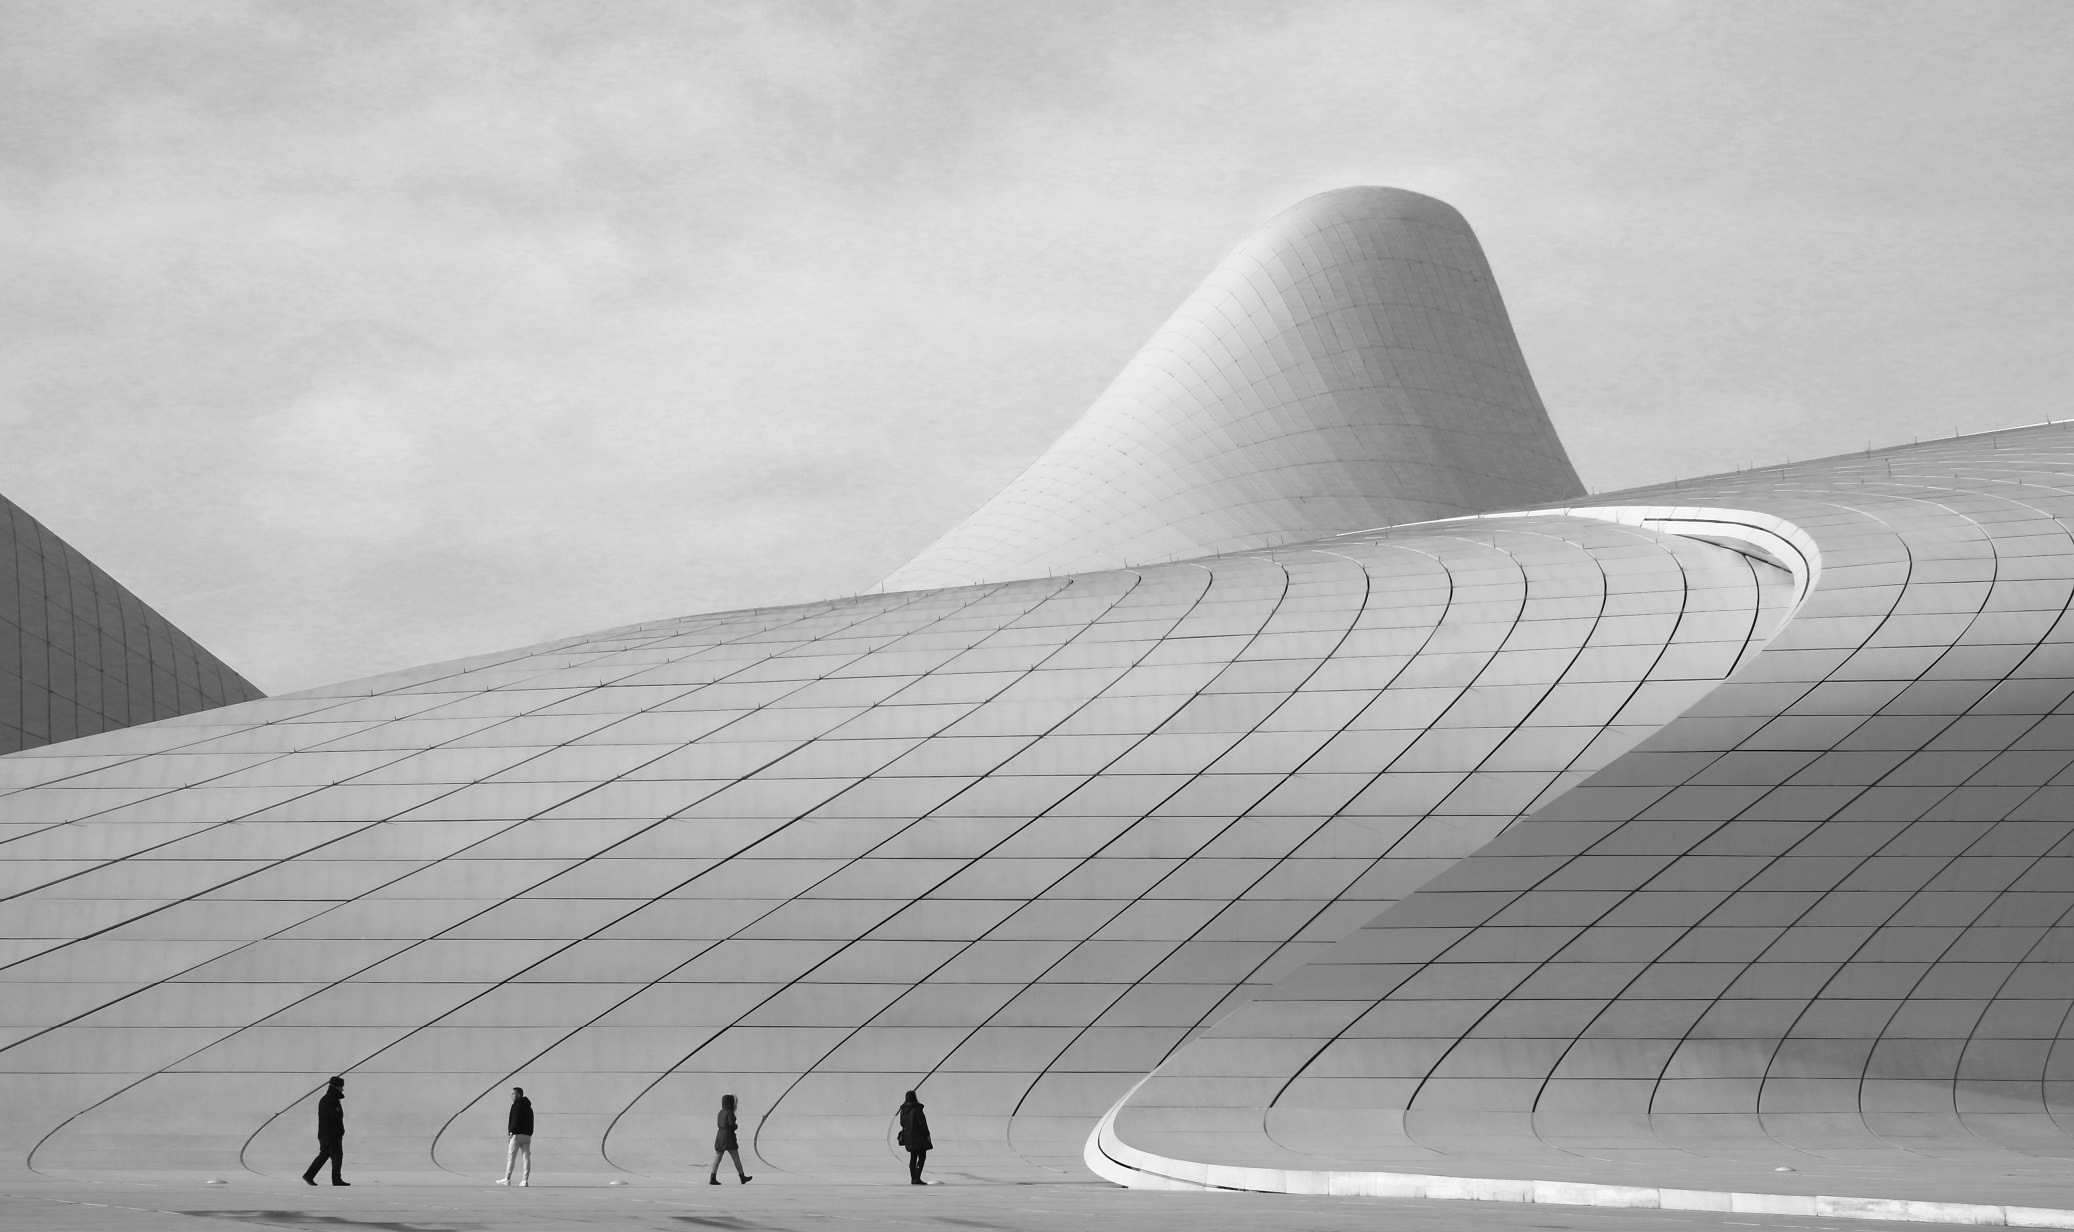 The overall winner was Nurlan Tahirli's photo of the Heydar Aliyev Center in Baku, Azerbaijan